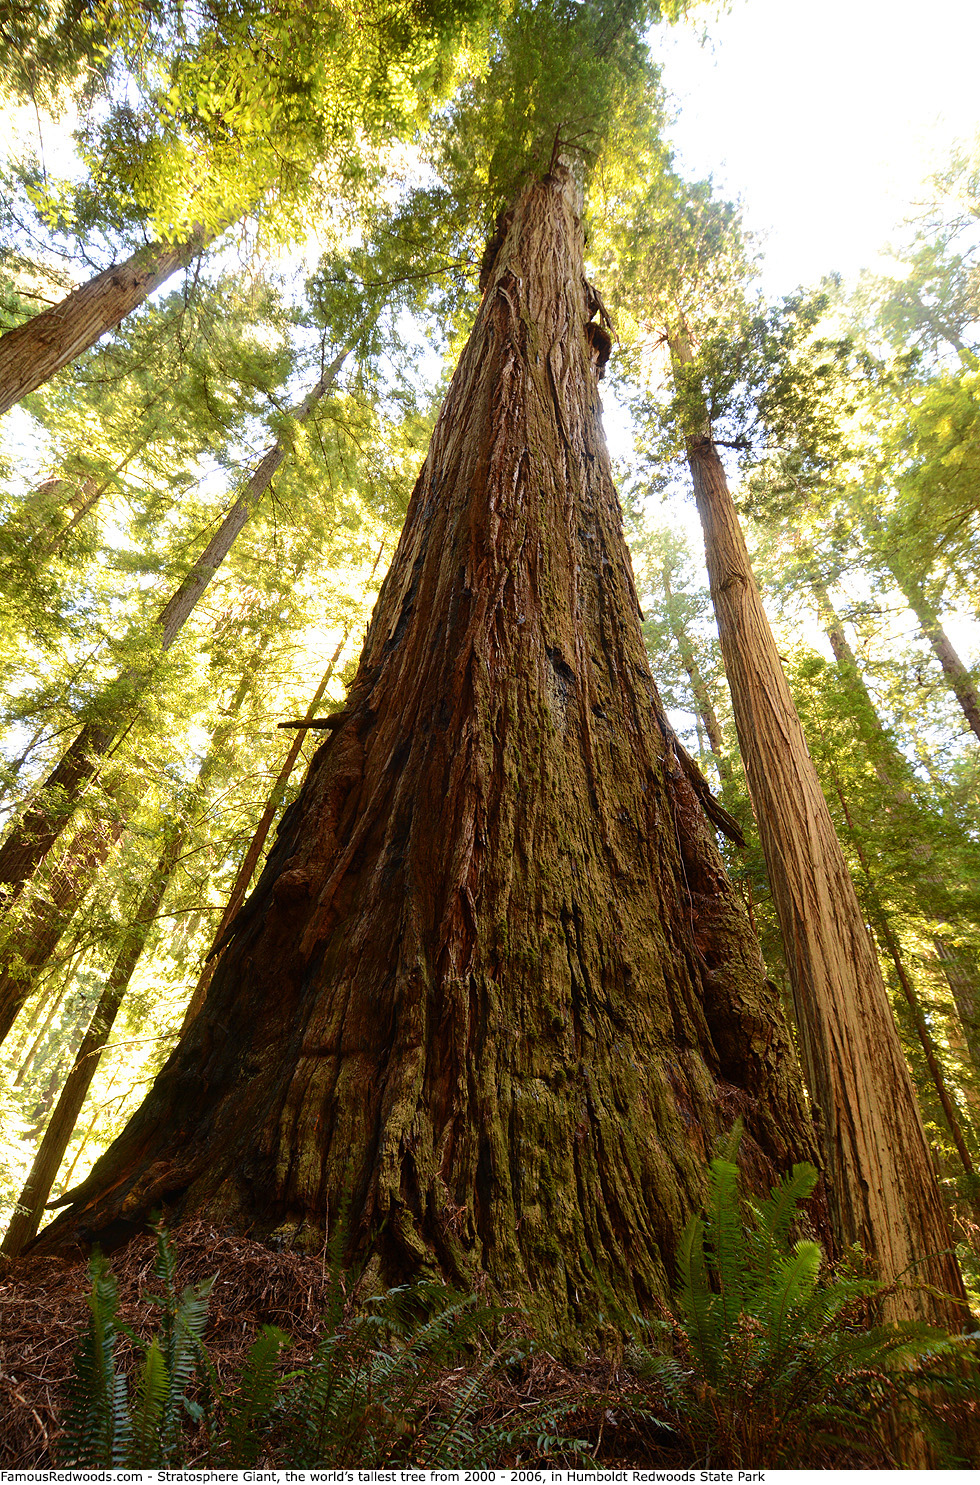 Humboldt Redwoods State Park - Stratosphere Giant Tree